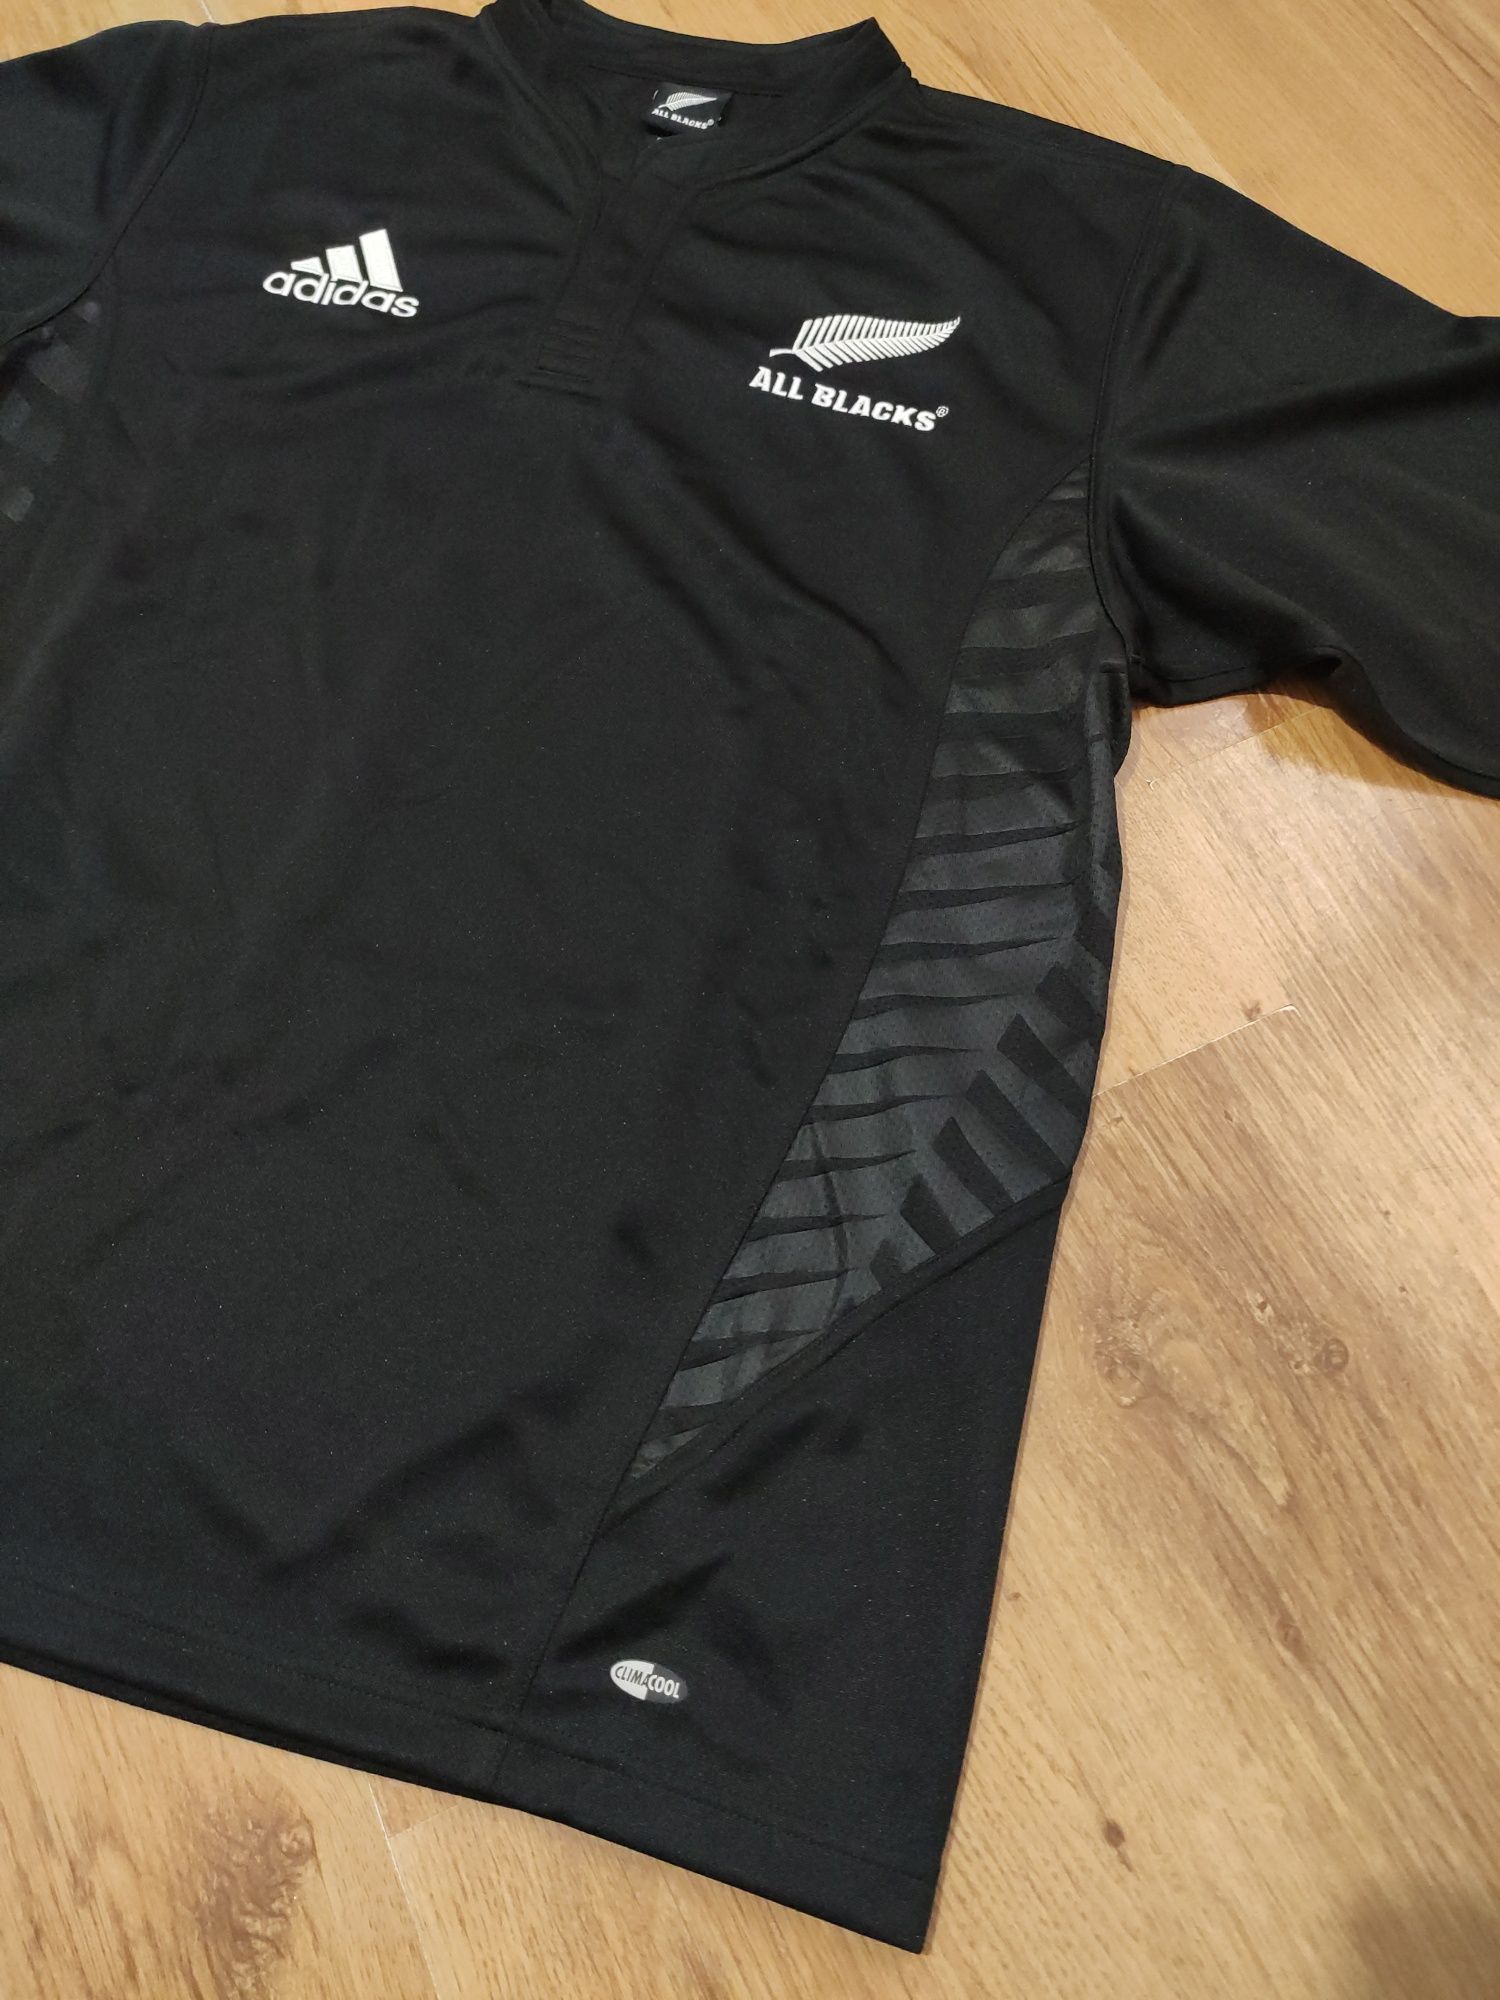 Tricou rugby Adidas All Blacks Noua Zeelanda mărimea XL